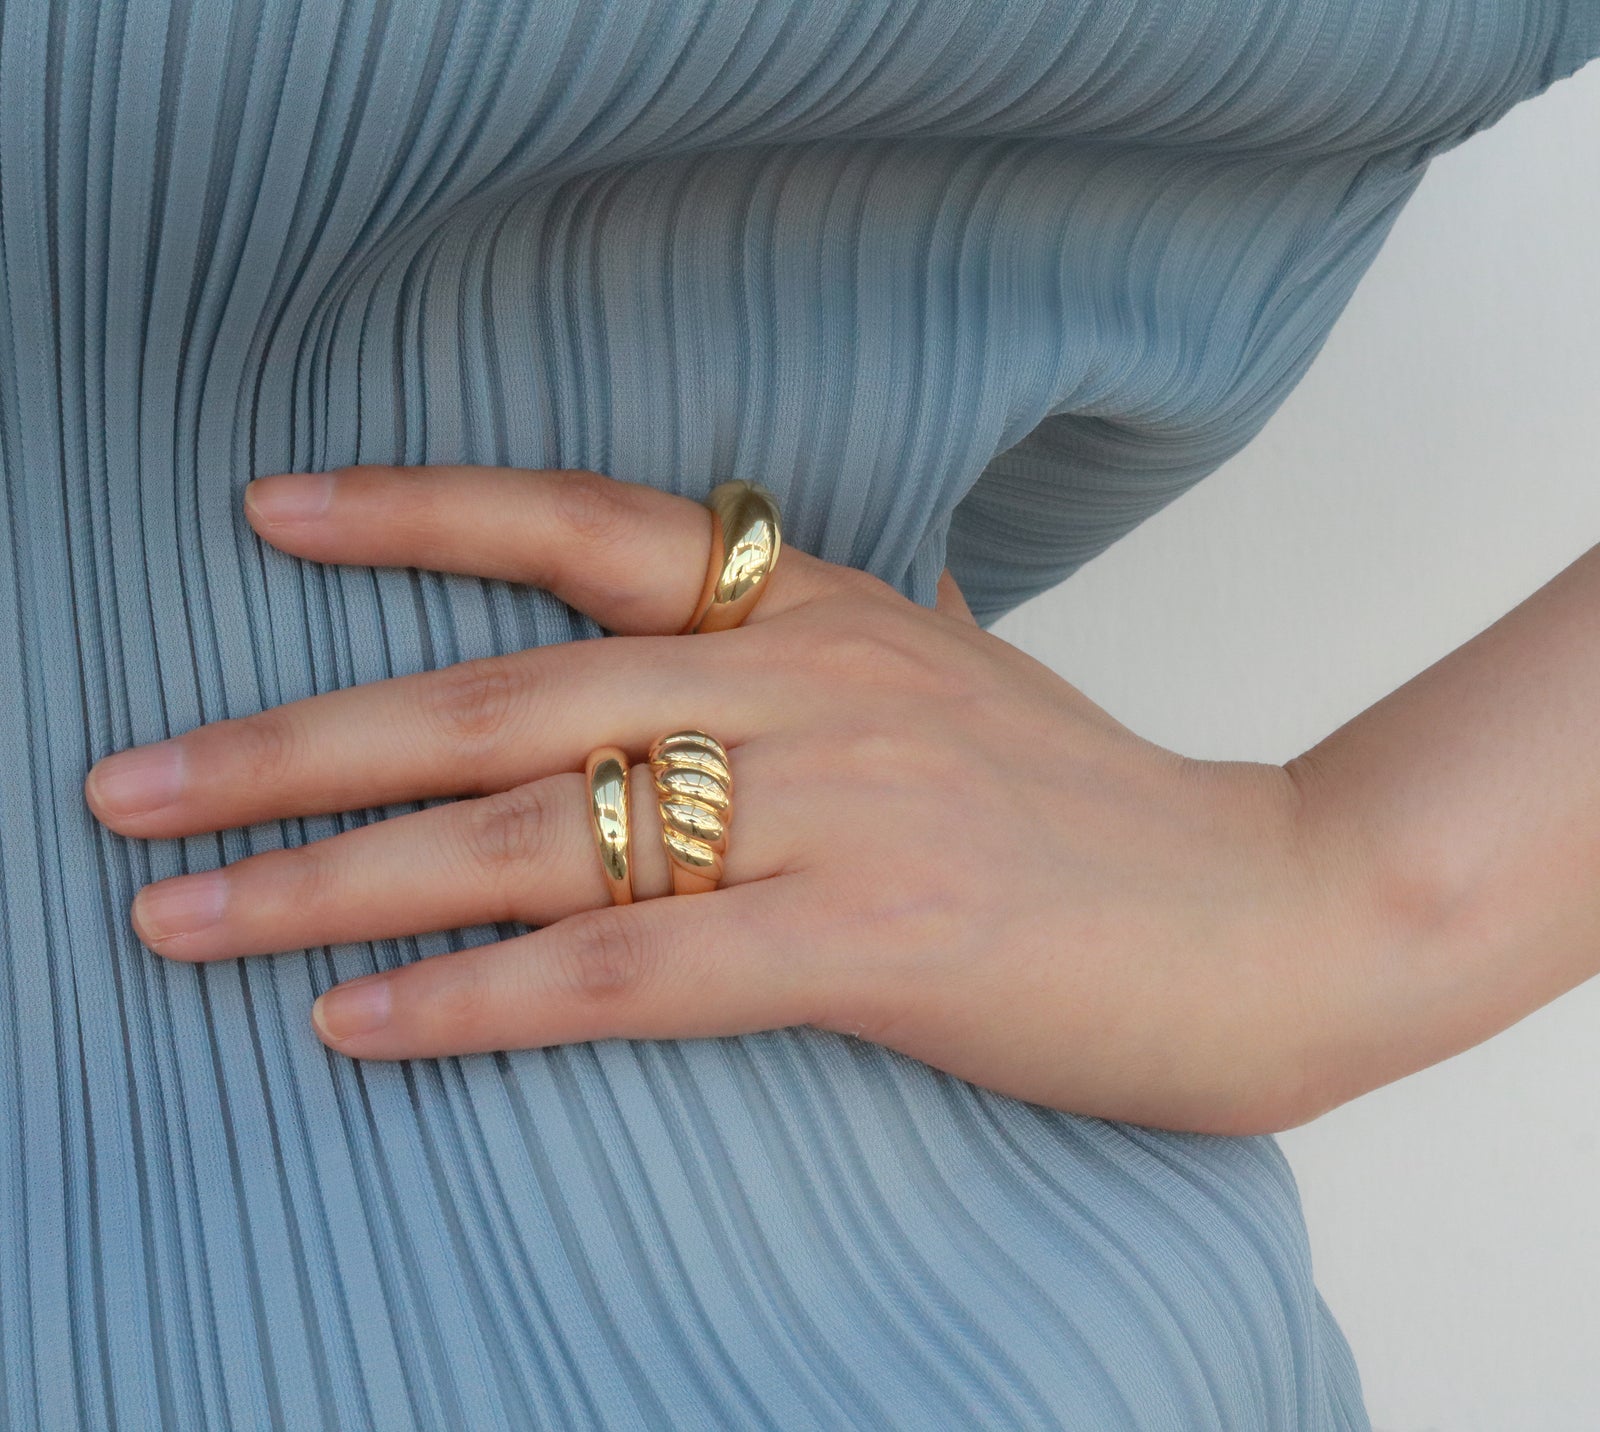 Meideya Jewelry - The mia ring in 18k gold vermeil